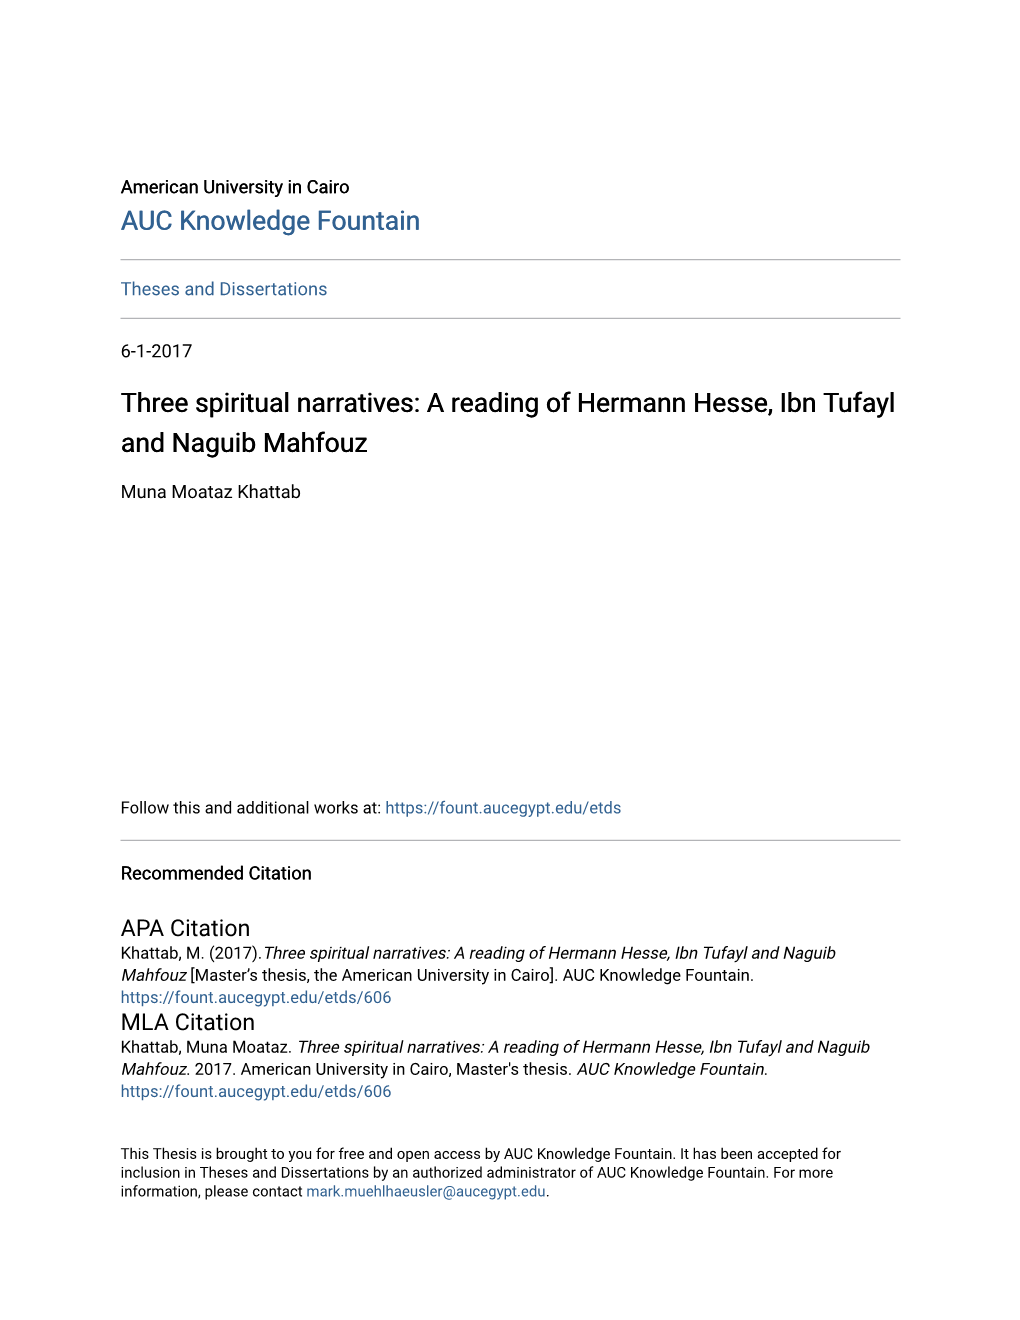 A Reading of Hermann Hesse, Ibn Tufayl and Naguib Mahfouz